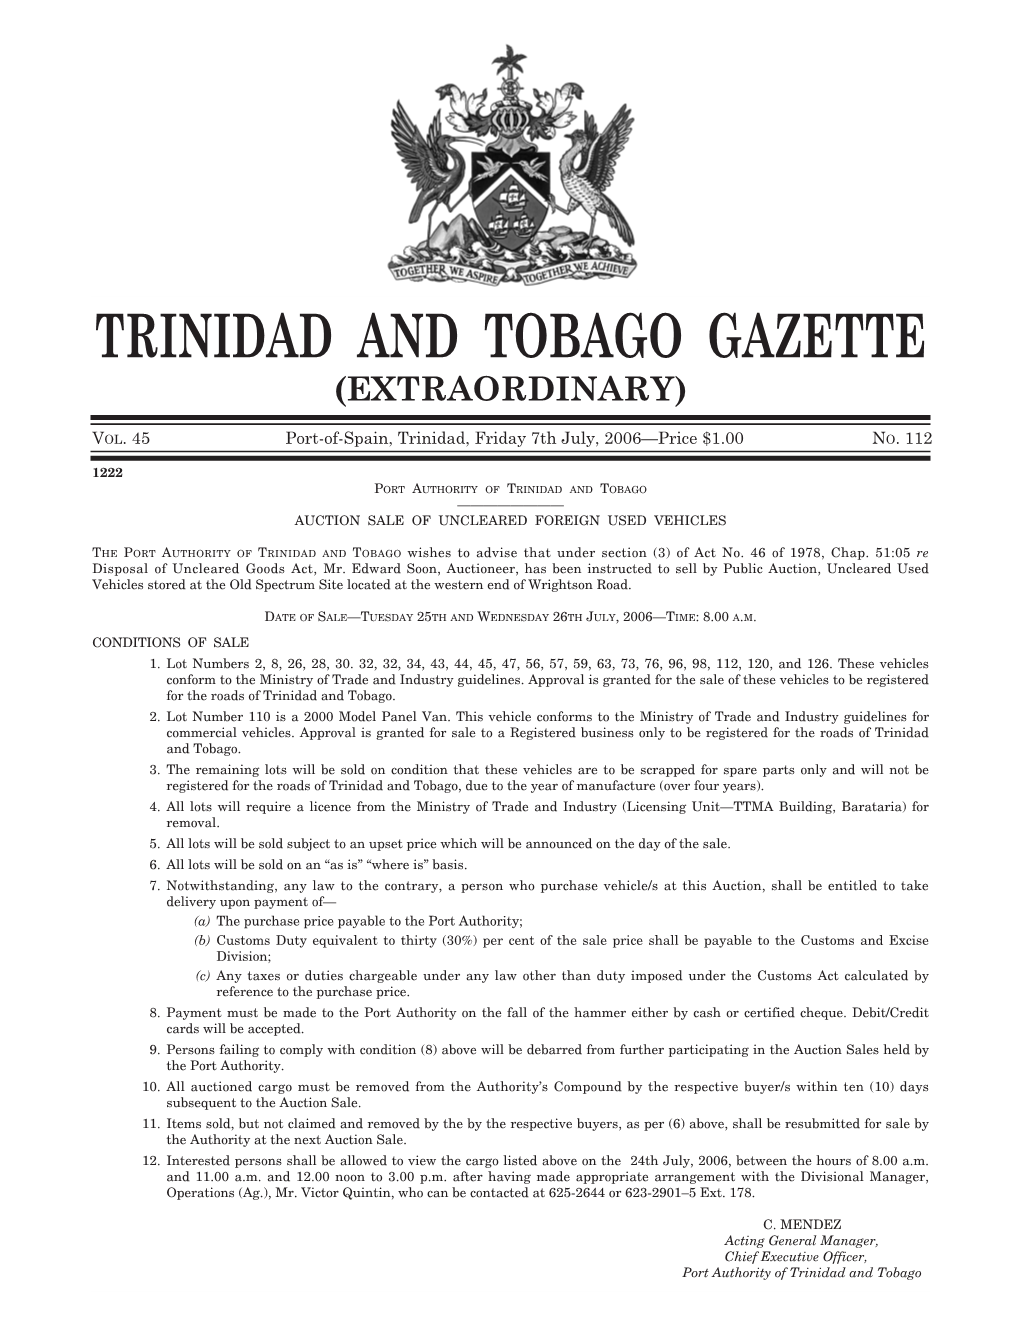 Gazette No. 112, Vol. 45, 7Th July, 2006—Extra